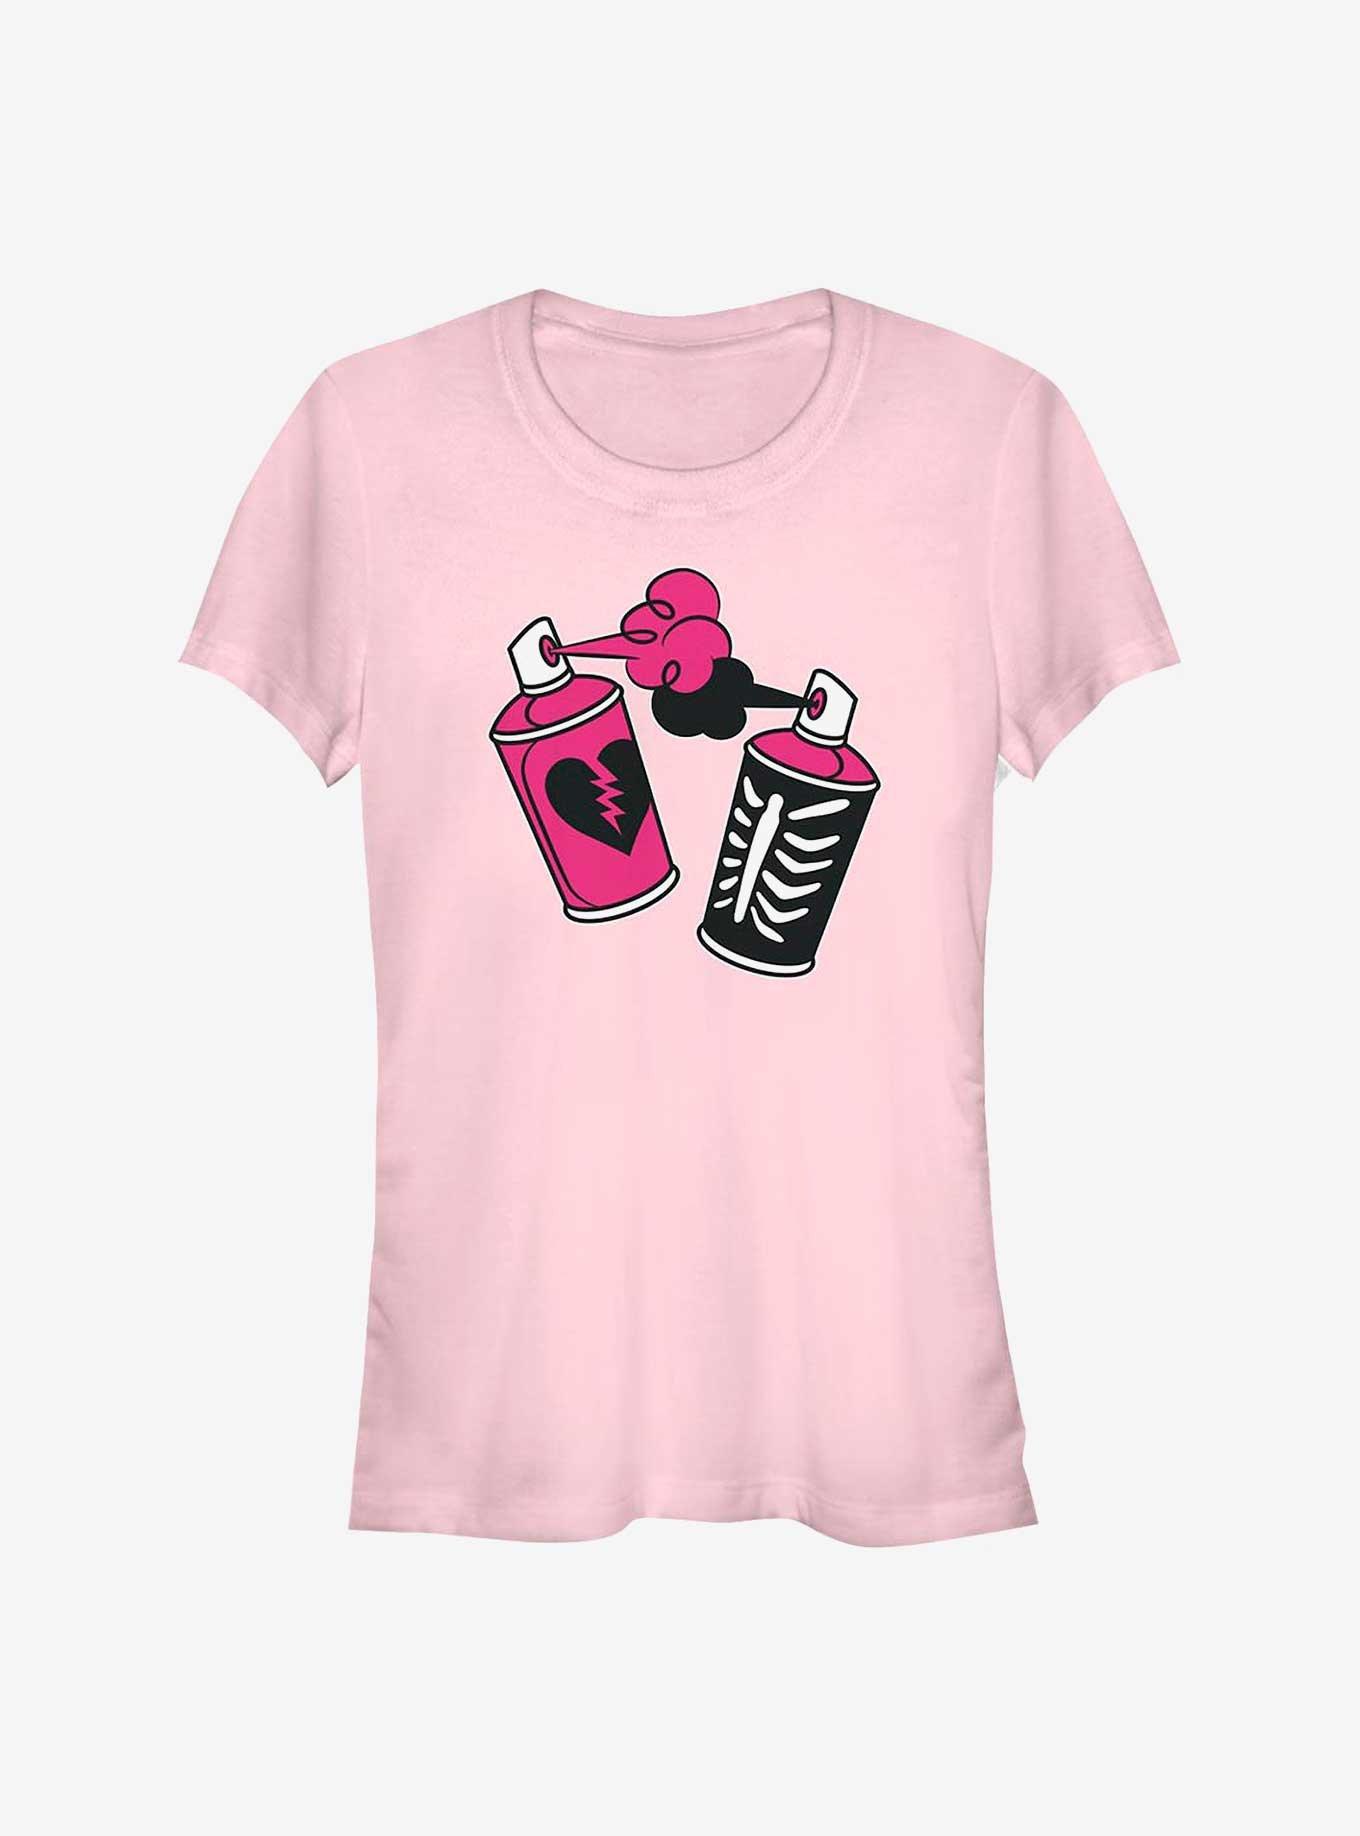 Fortnite Spray Cans Girls T-Shirt, LIGHT PINK, hi-res